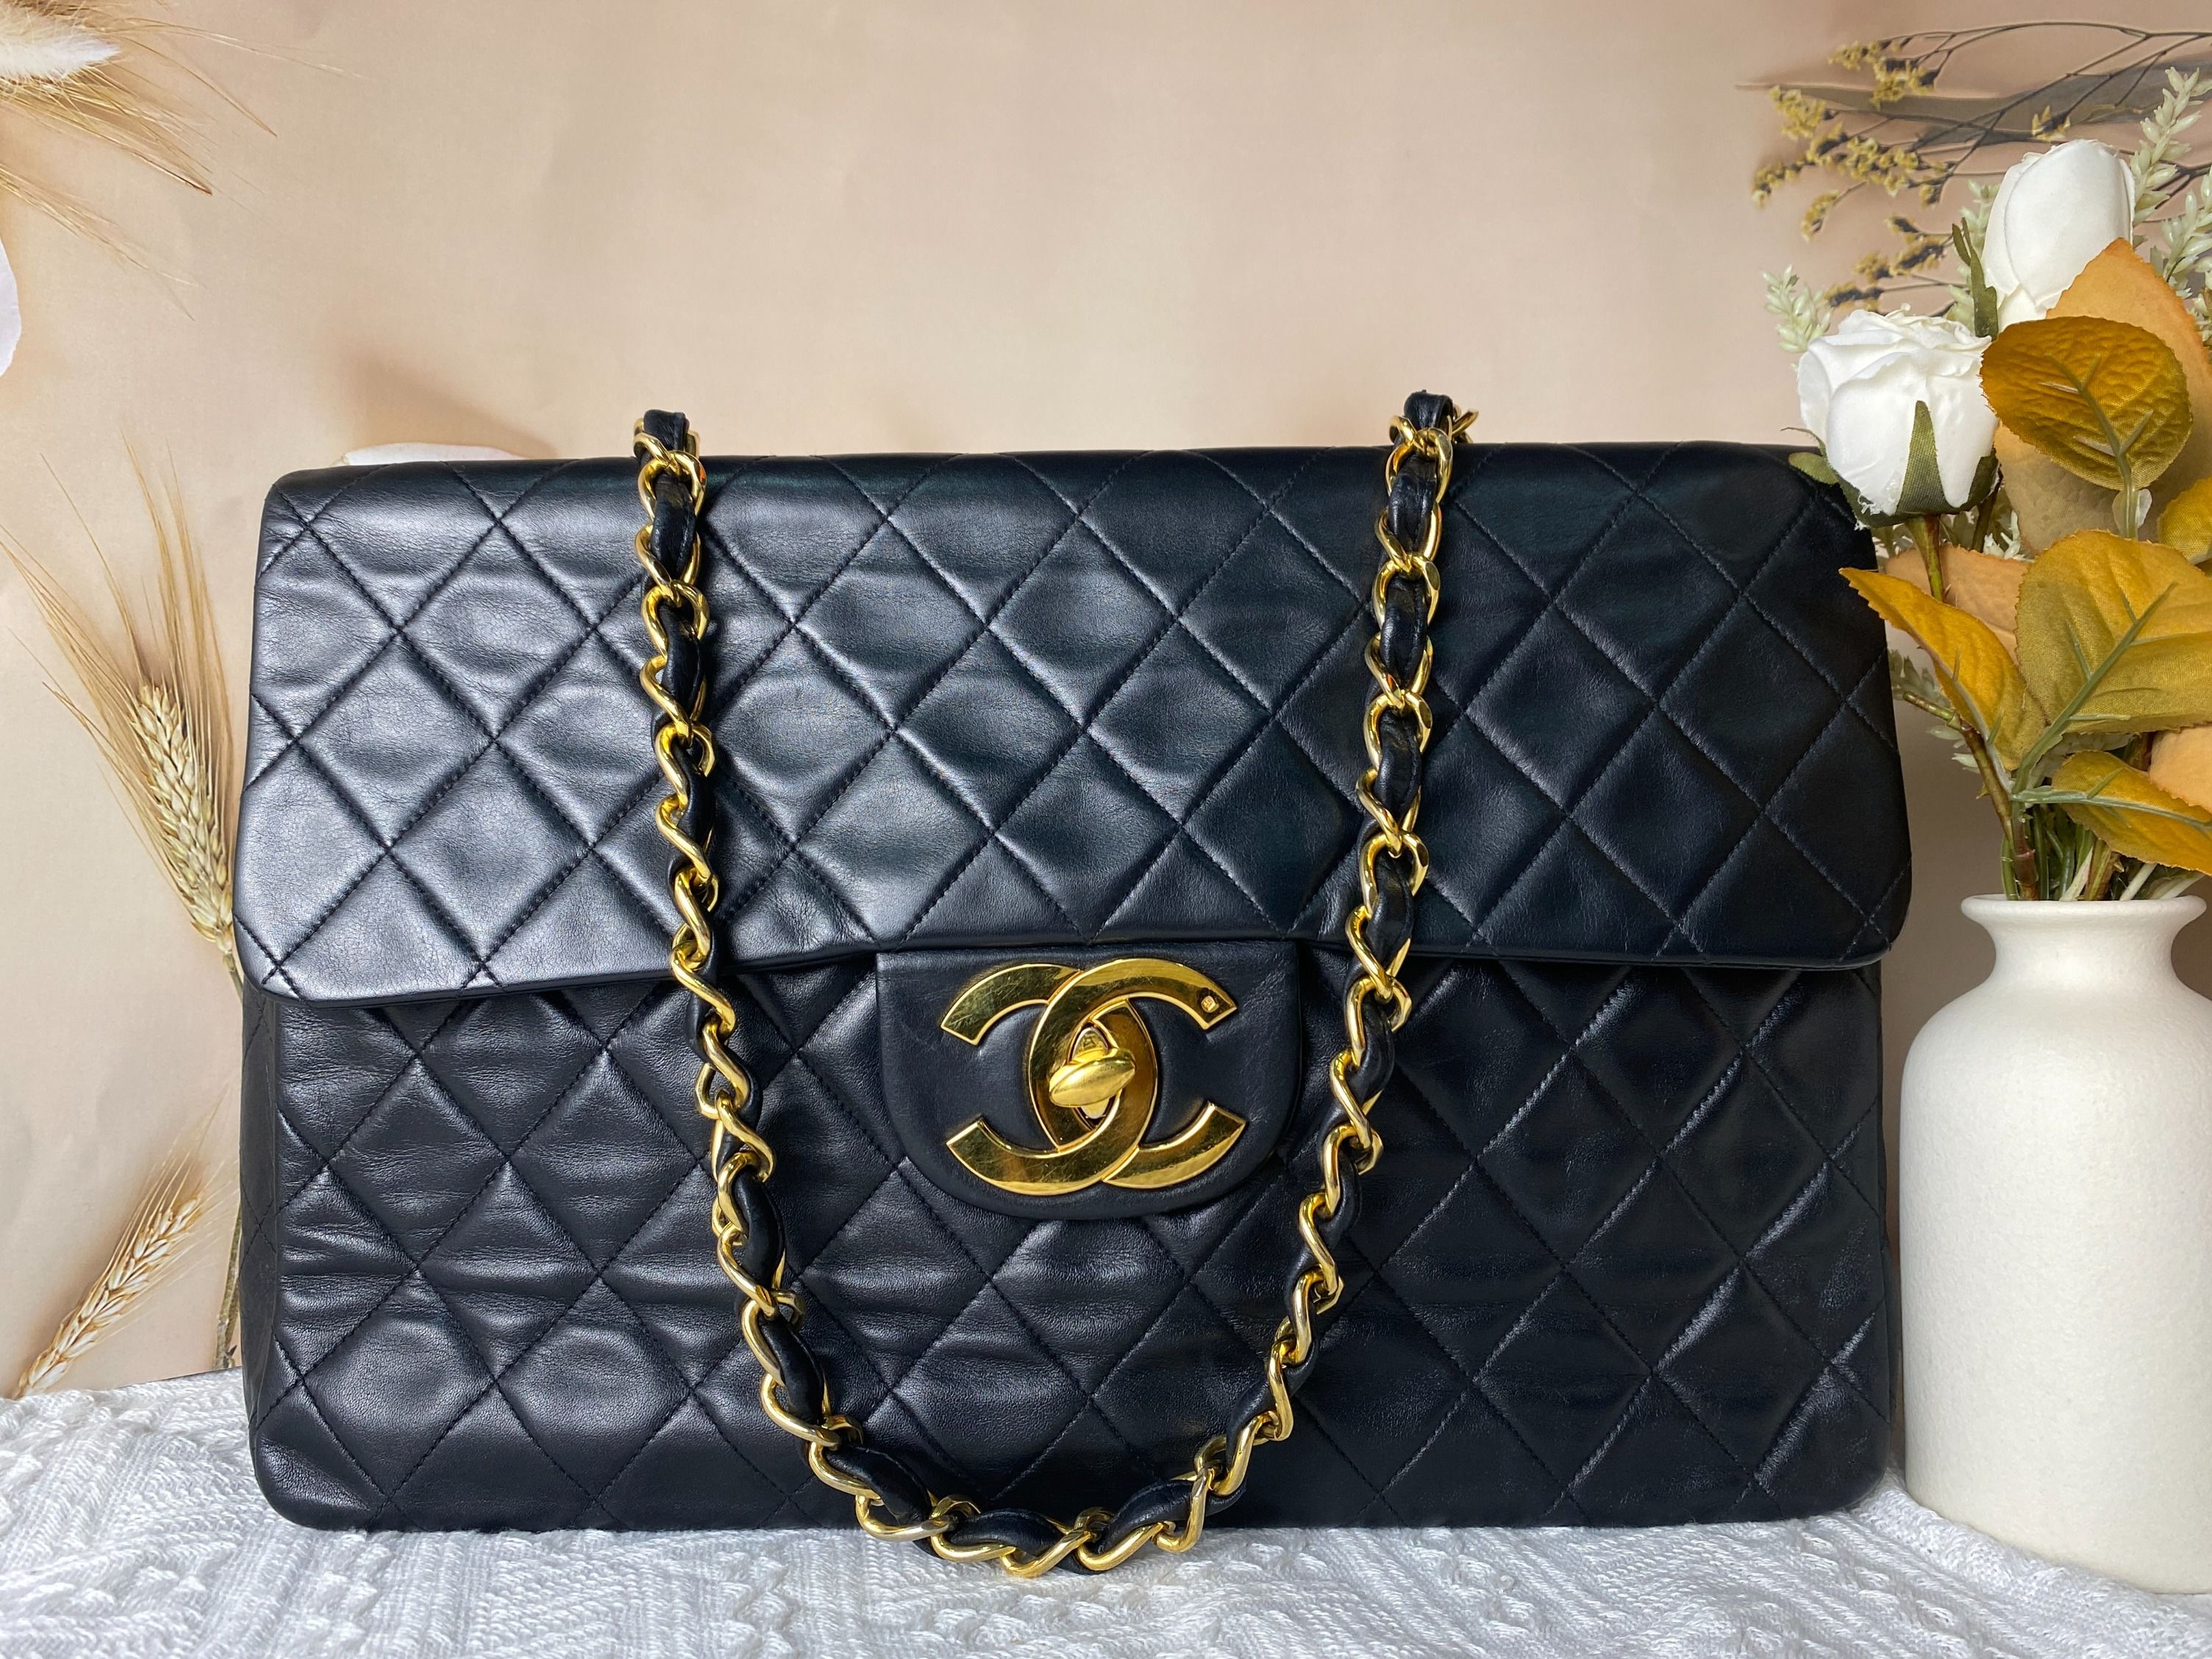 Chanel - Classic Flap Bag - Jumbo - Black Lambskin - SHW - Pre-Loved